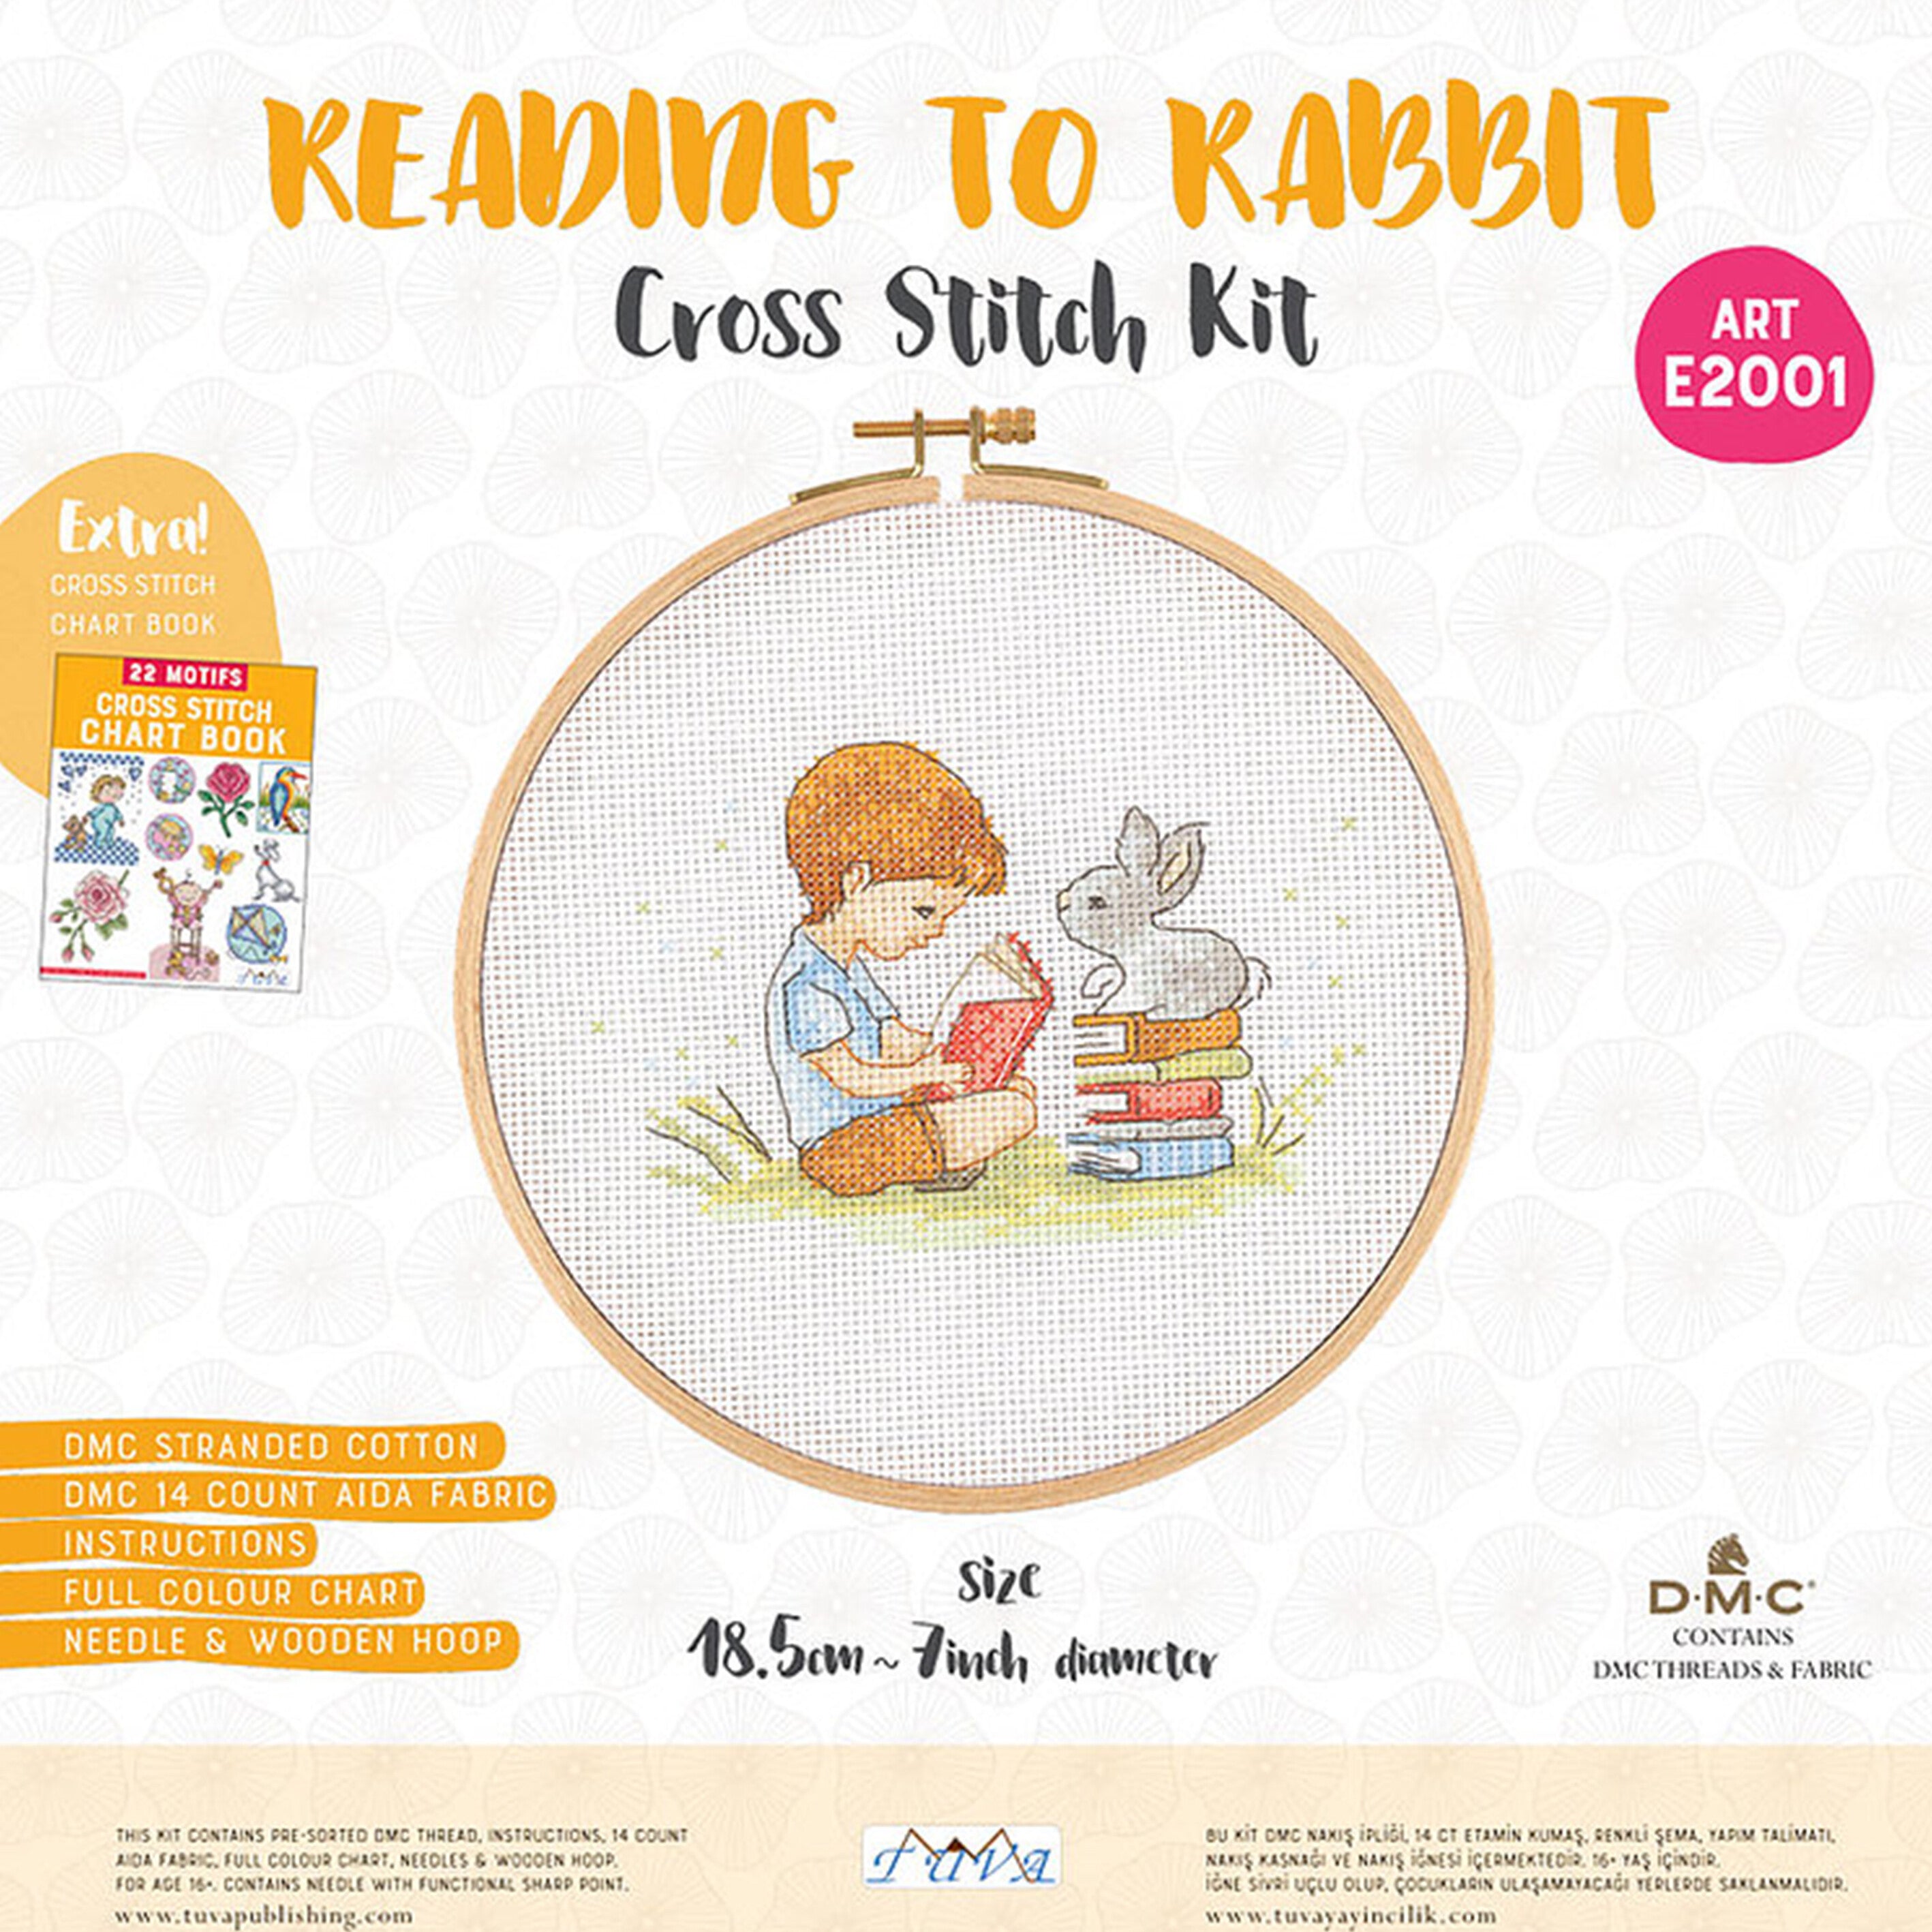 Tuva Cross Stitch Kit, Reading to Rabbit - E2001